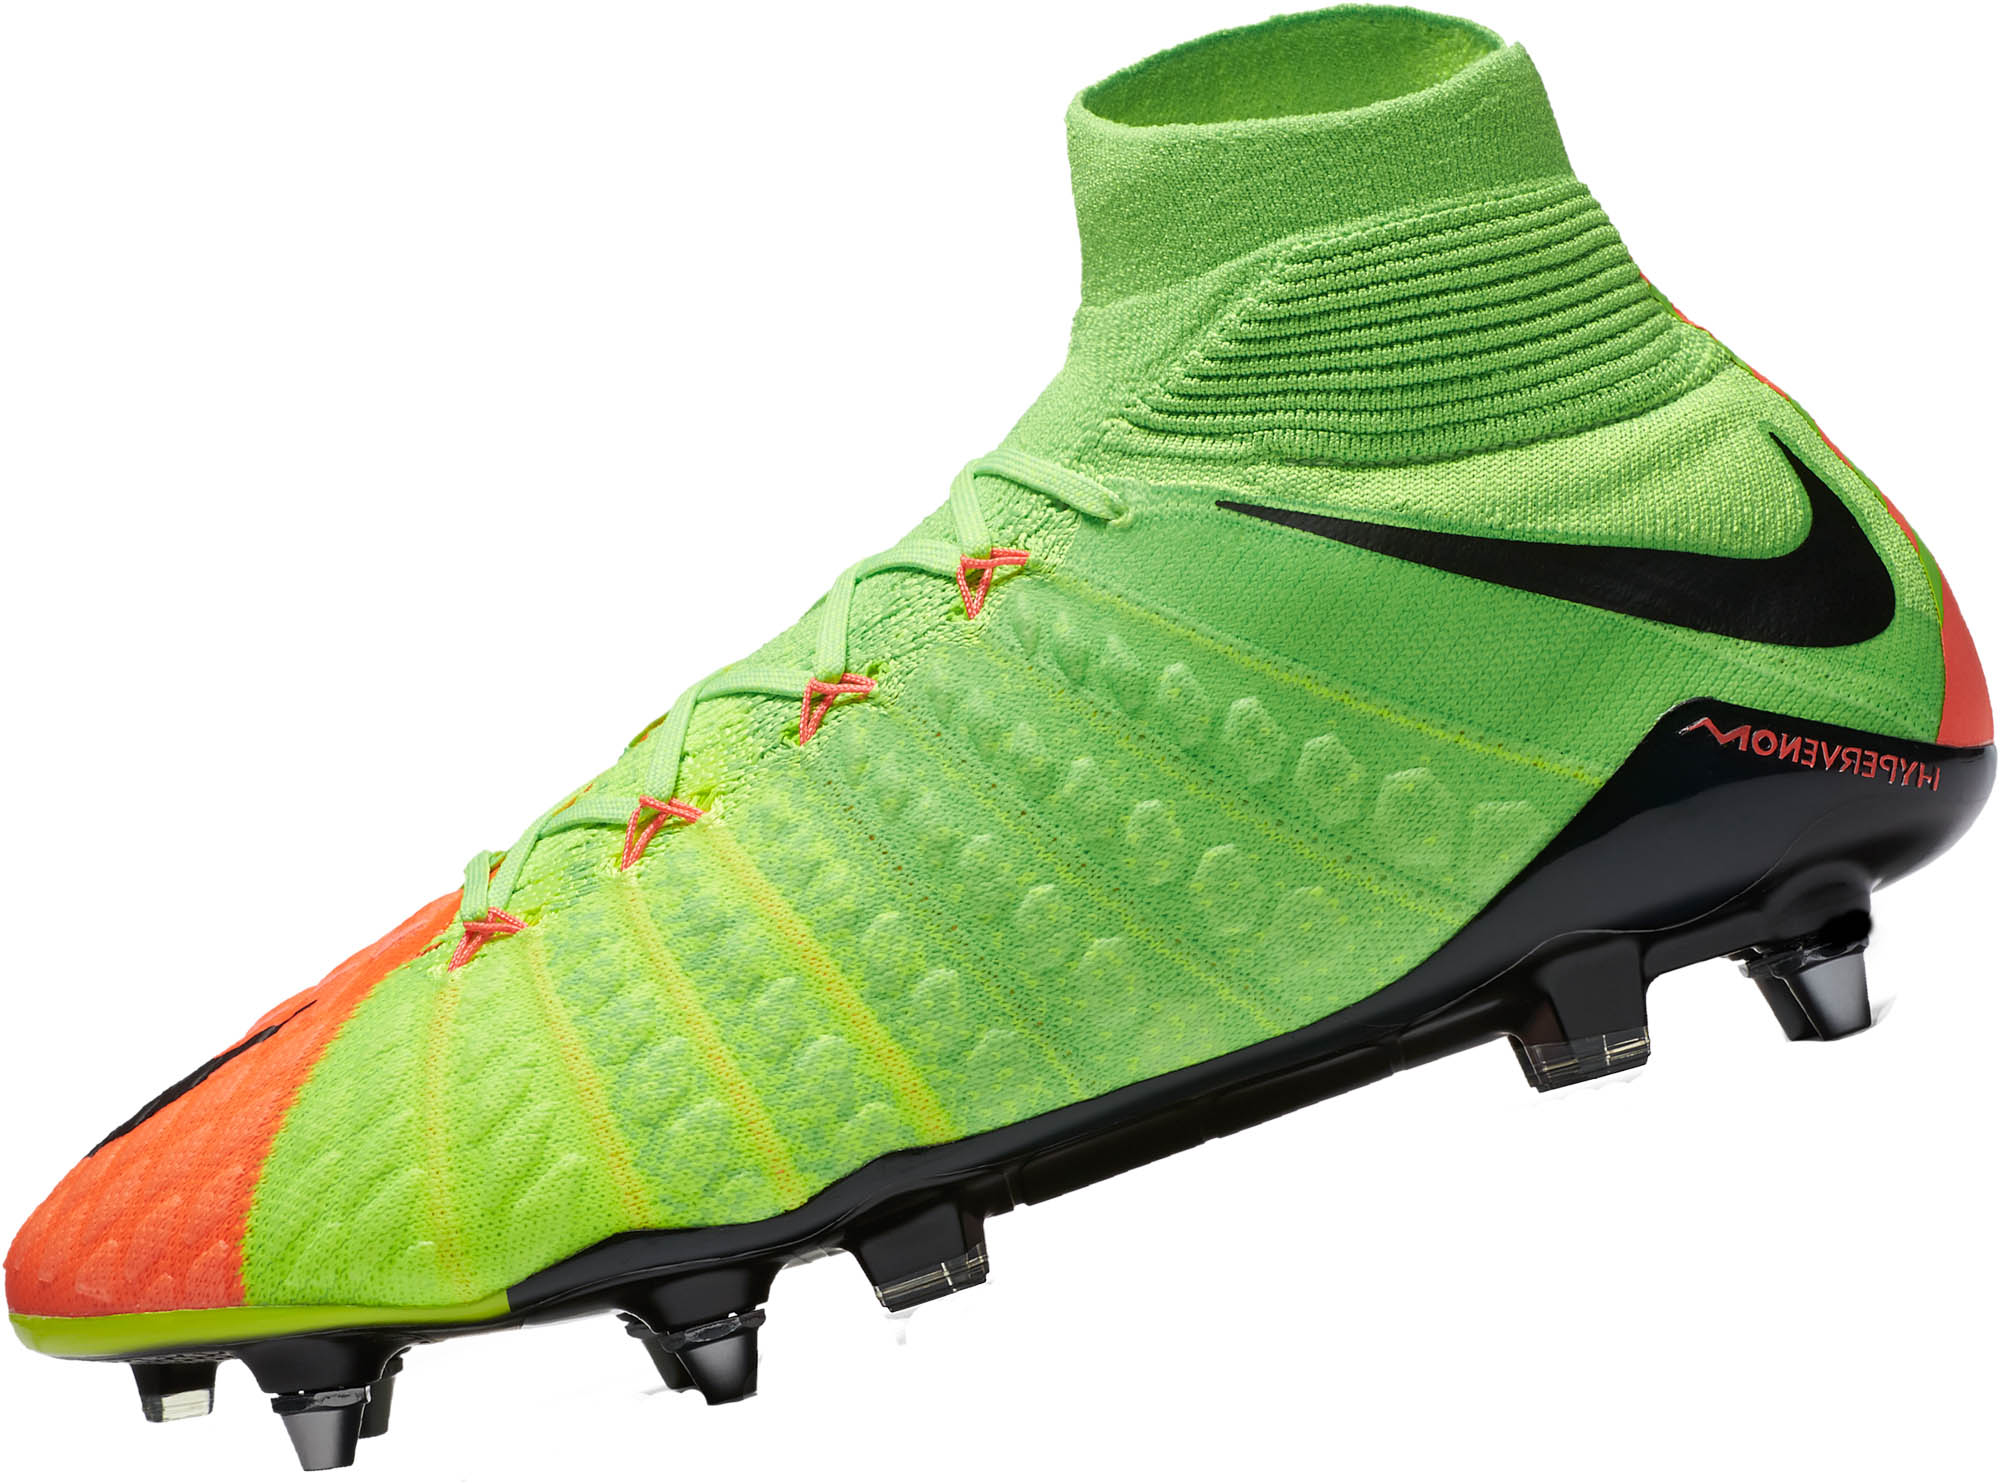 Nike Hypervenom Phantom DF III SG-Pro - Electric Green & Hyper Orange -  Soccer Master